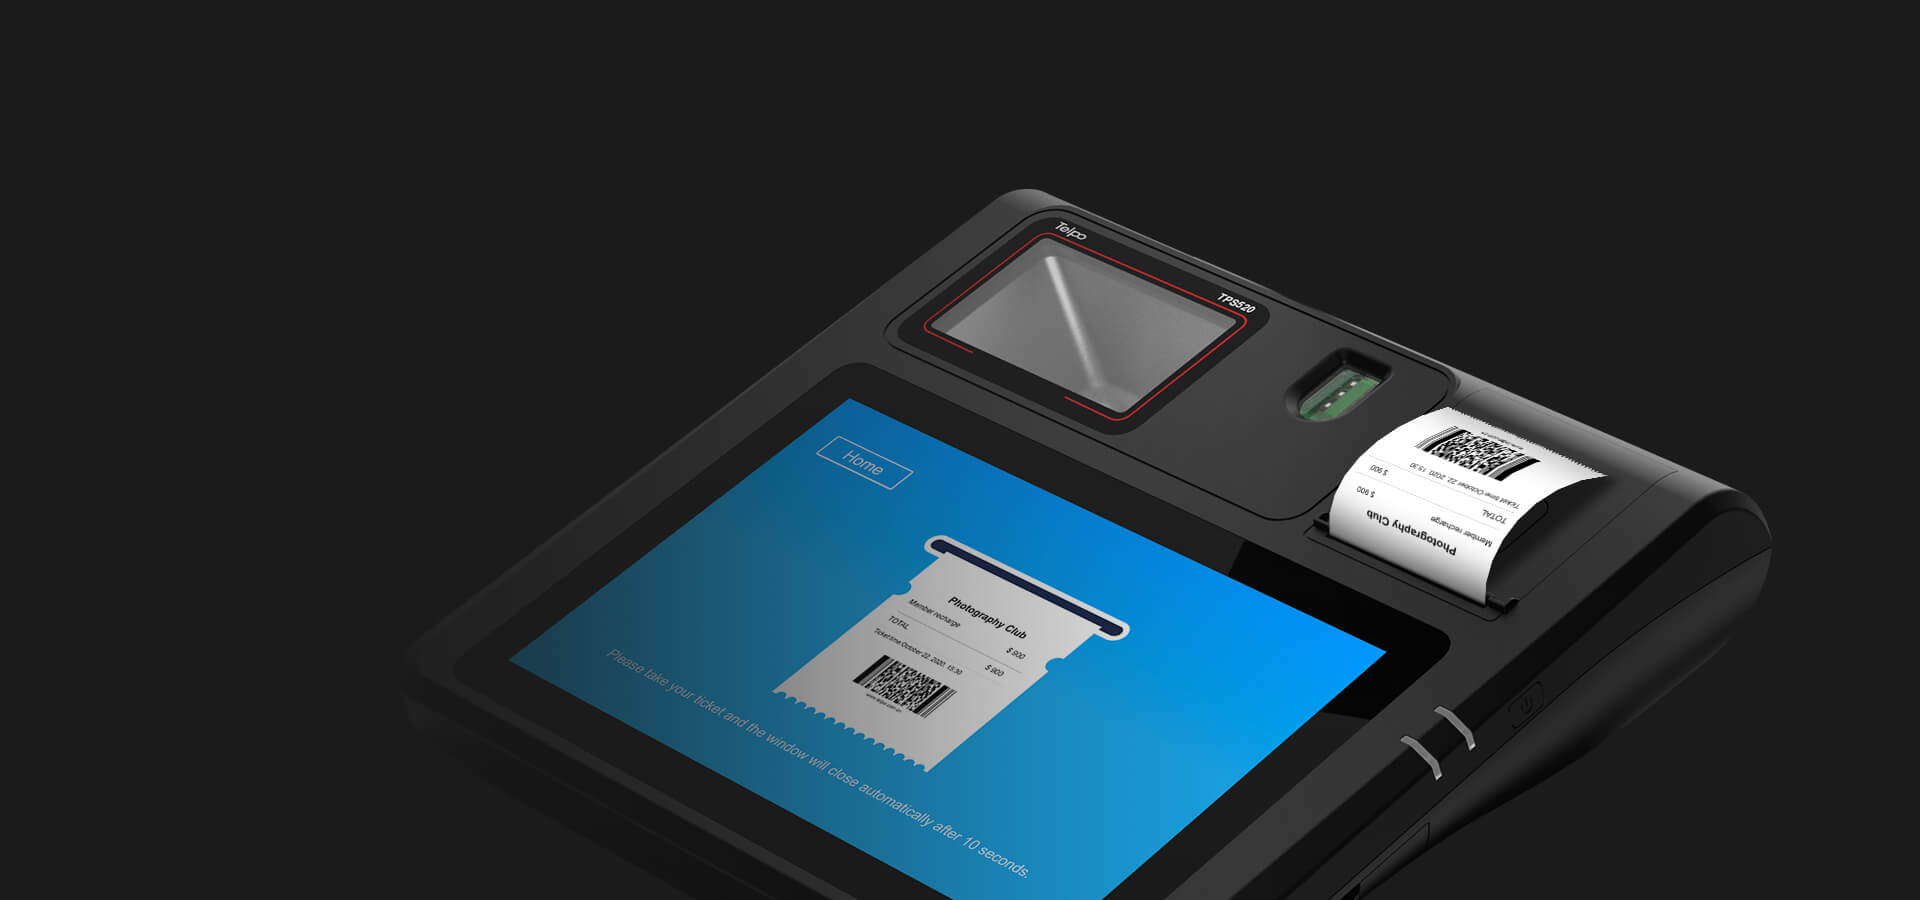 Fingerprint identification cashier billing machine with thermal printer